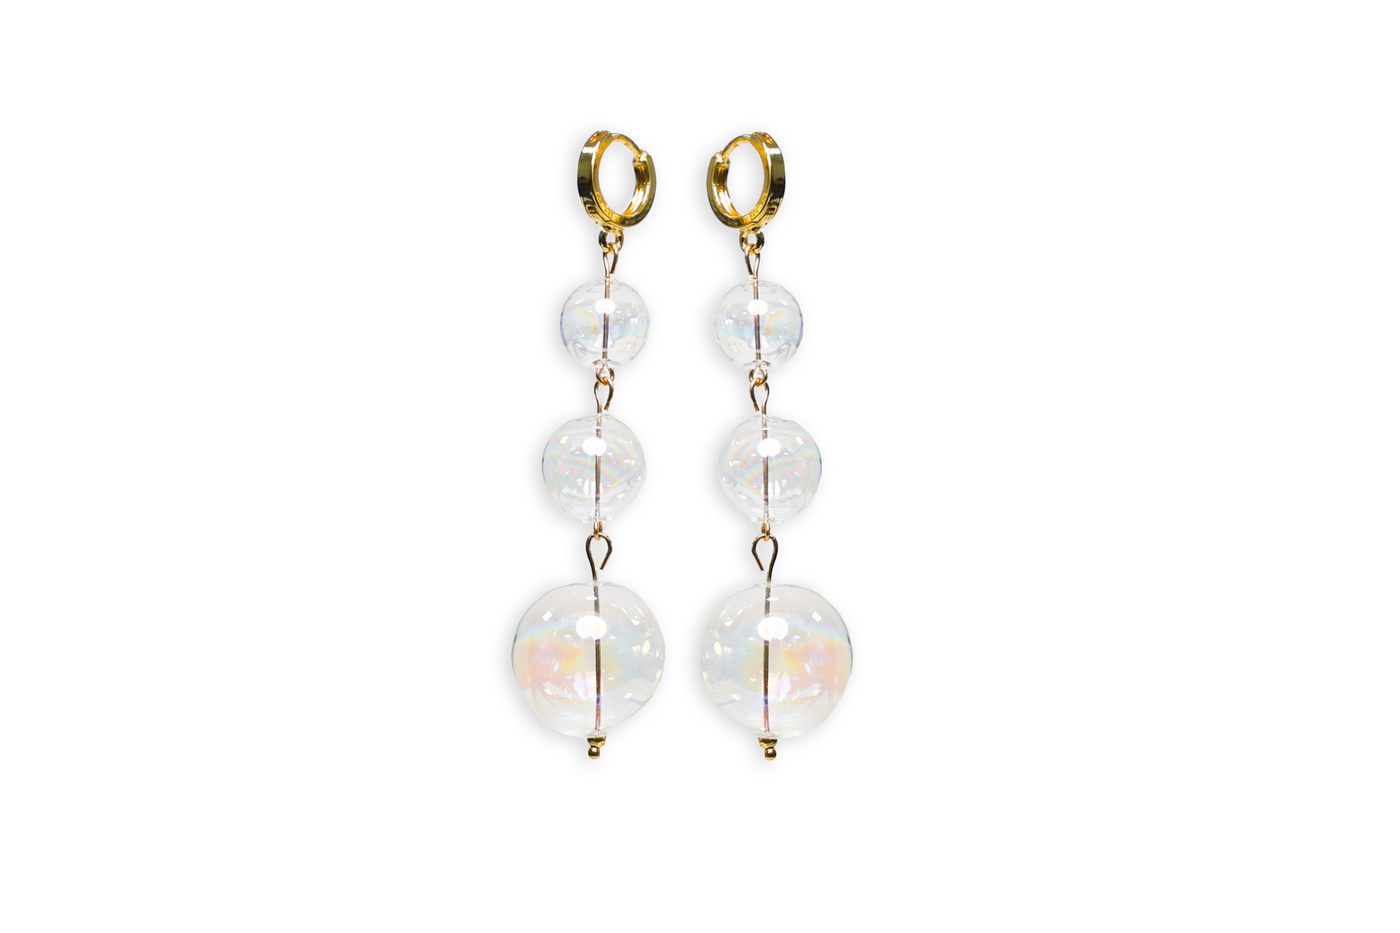 Hand blown glass beaded drop earrings inspired by bubbles